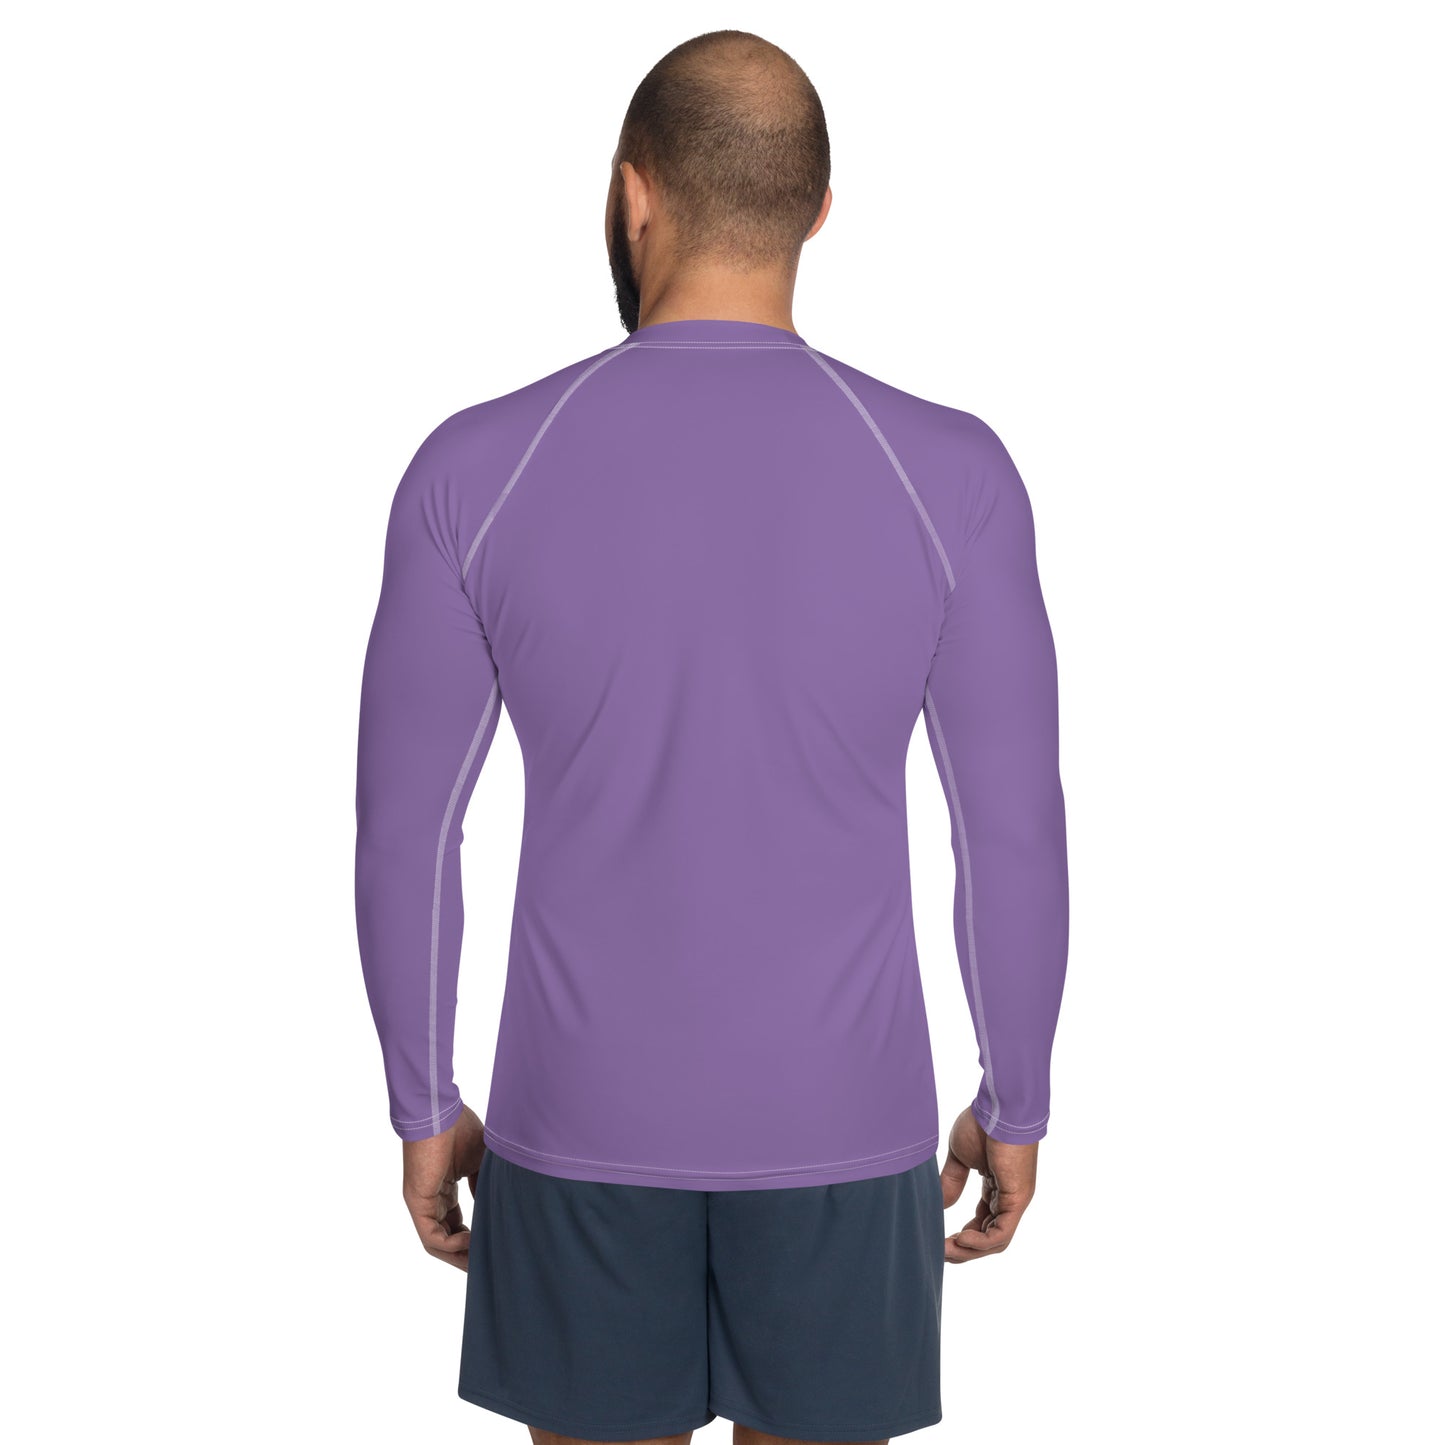 Humble sportswear, men's color match activewear long sleeve compression rash guard tops, purple